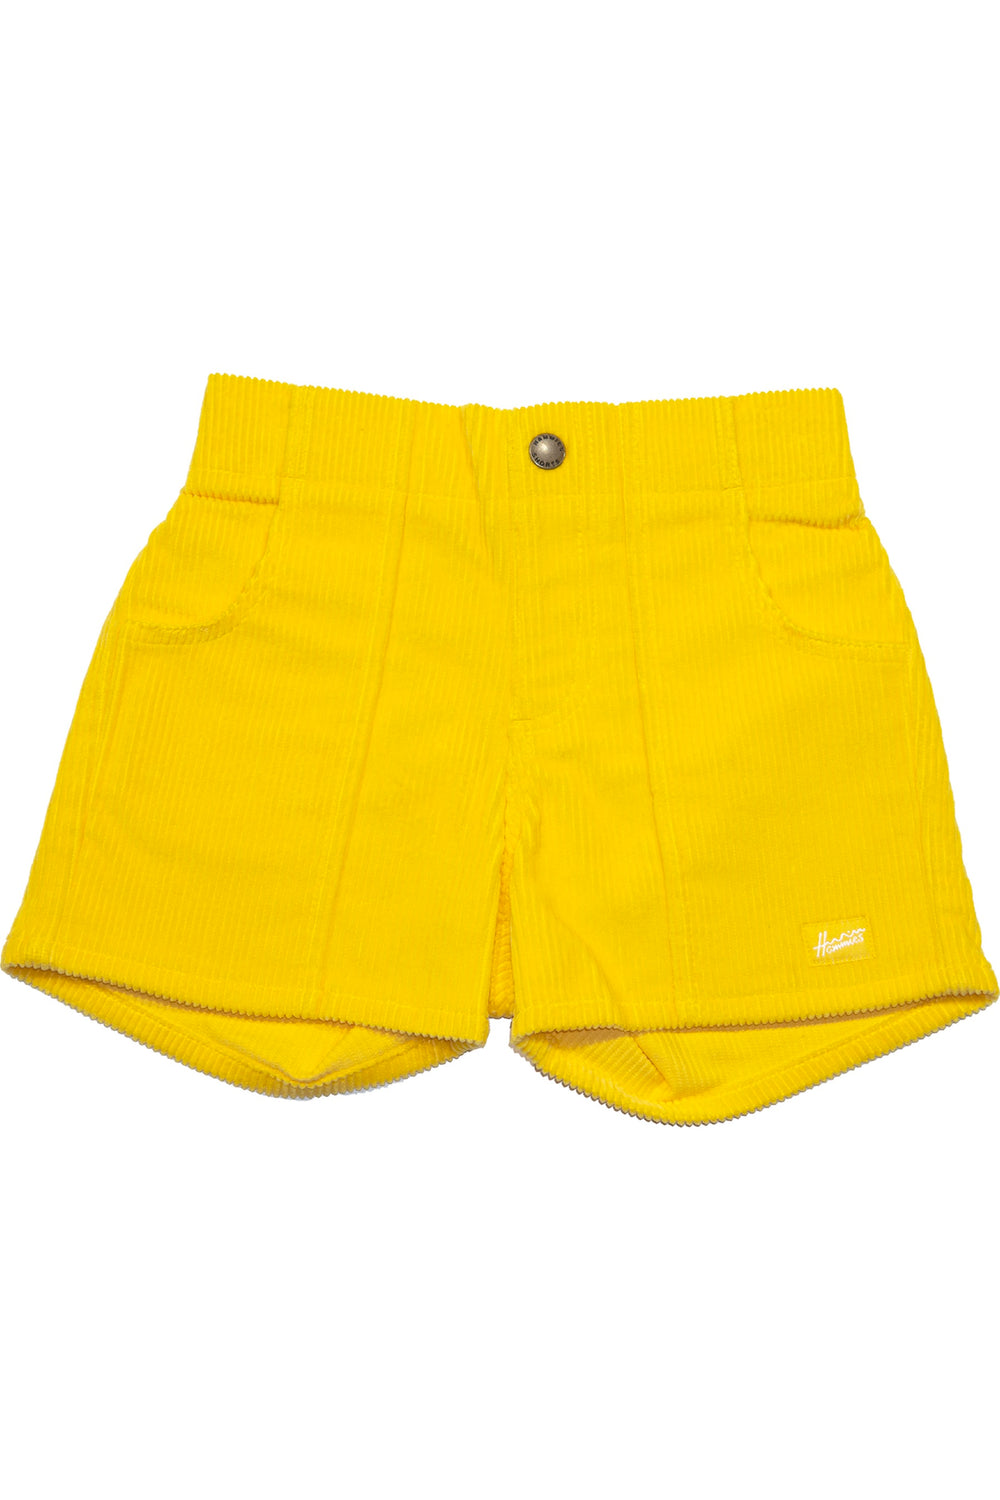 Hammies Shorts - Yellow